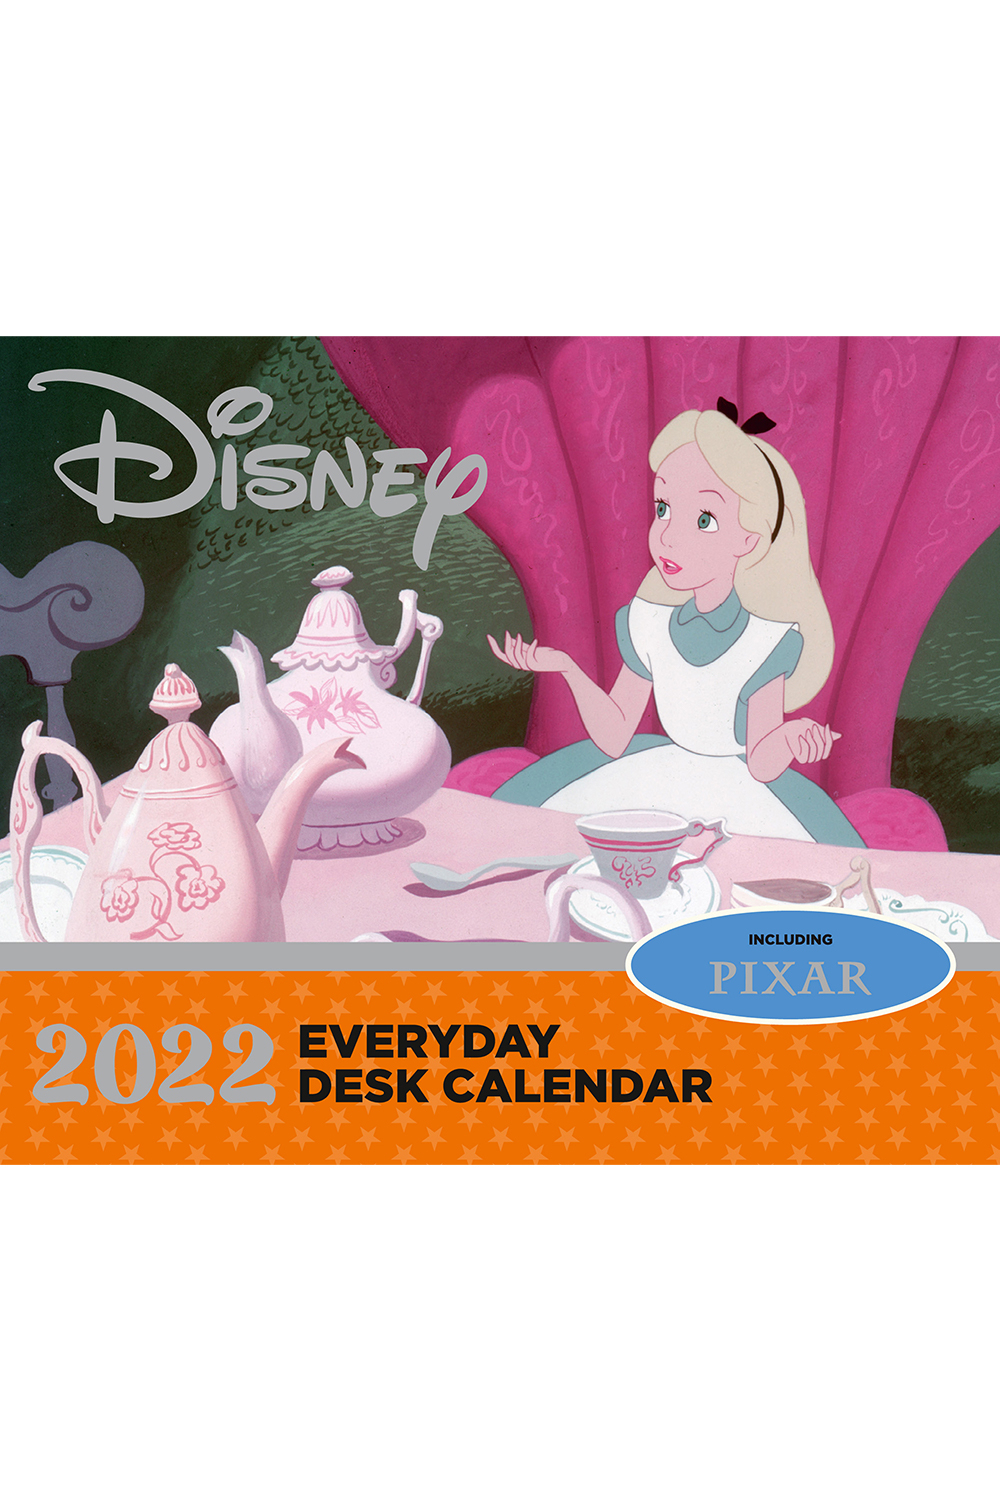 Take Disney Calendar May 2022